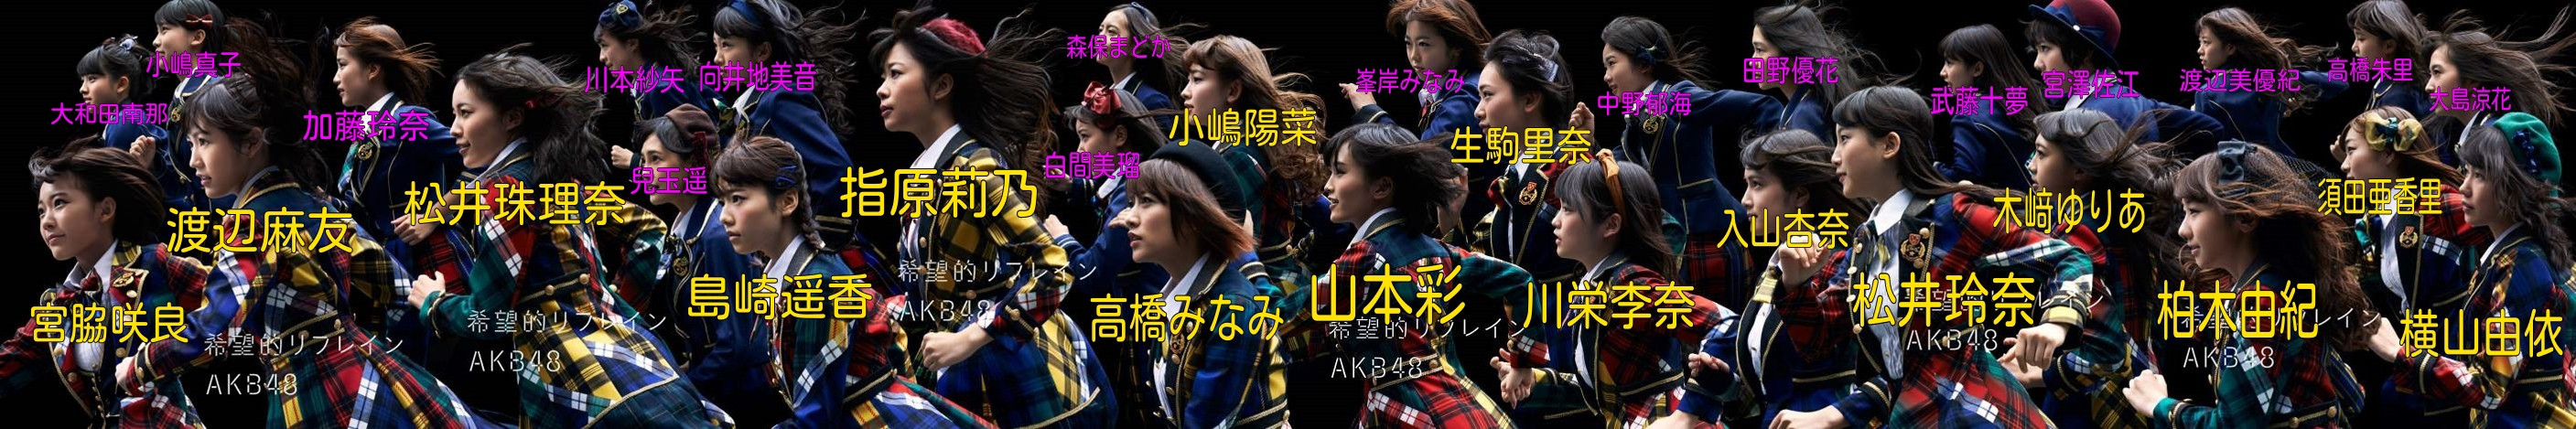 【AKB48】川本紗矢応援スレ★63【さやや】 	YouTube動画>57本 ->画像>1062枚 